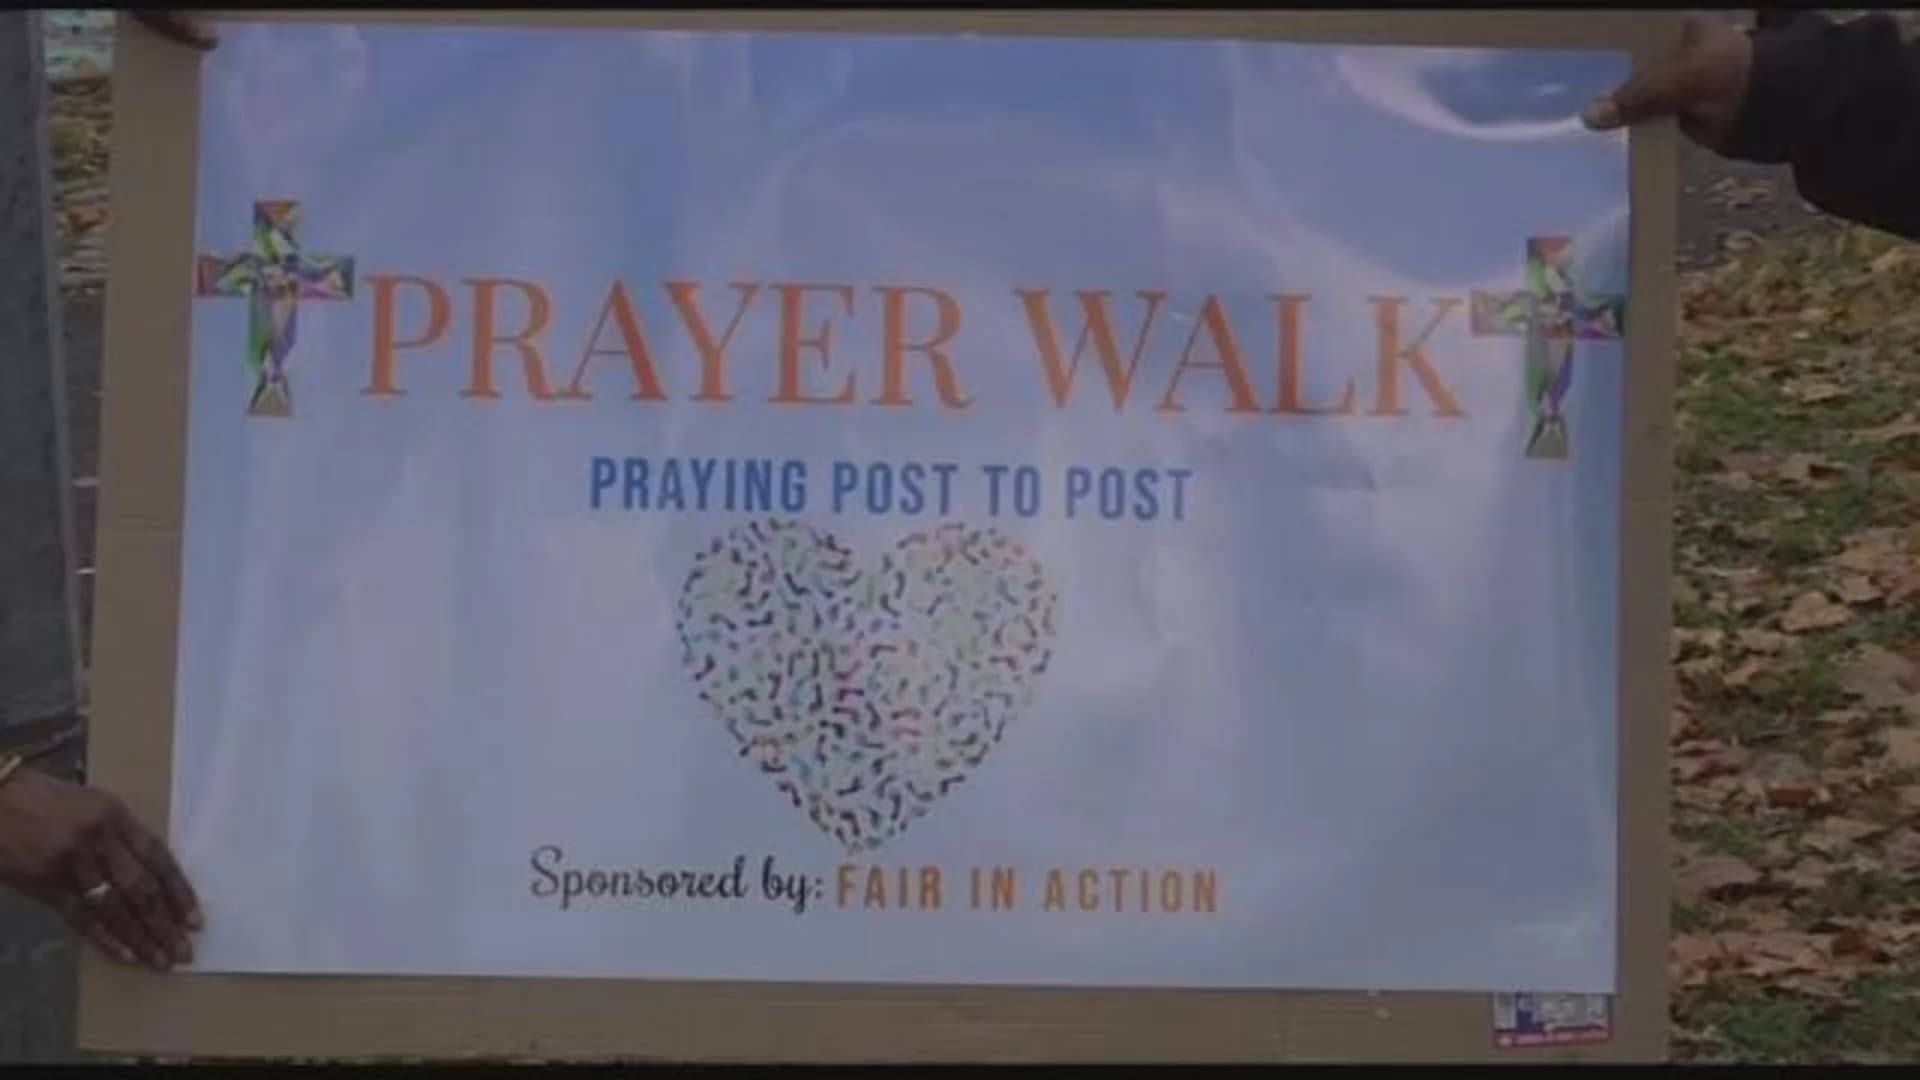 Prayer walk against violence held in the Bronx